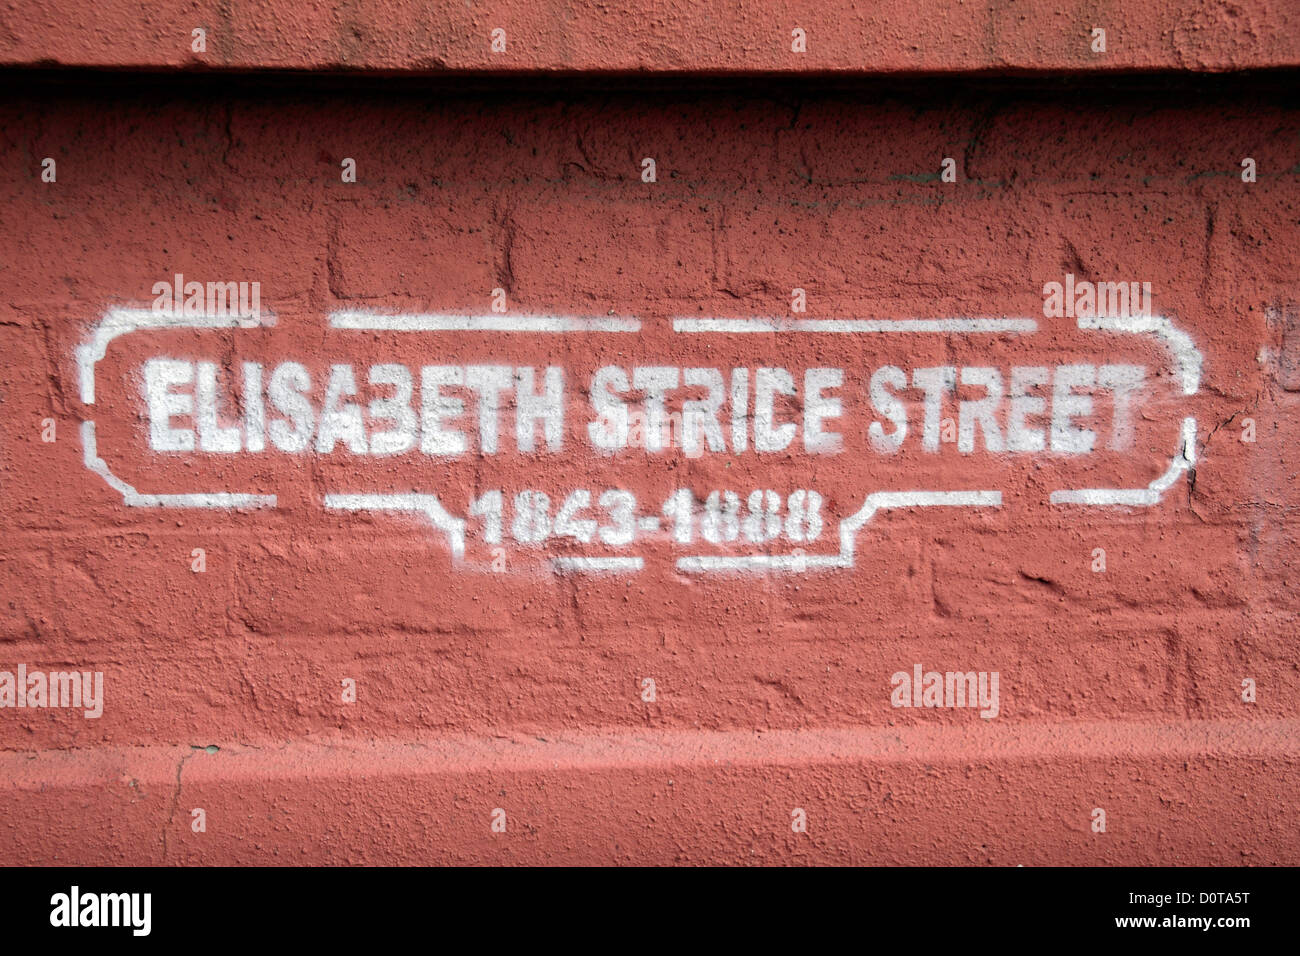 Tag on a wall on renaming Henriques Street, Elizabeth Stride Street , Jack the Ripper's 3rd victim, Whitechapel, London, E1, UK. Stock Photo